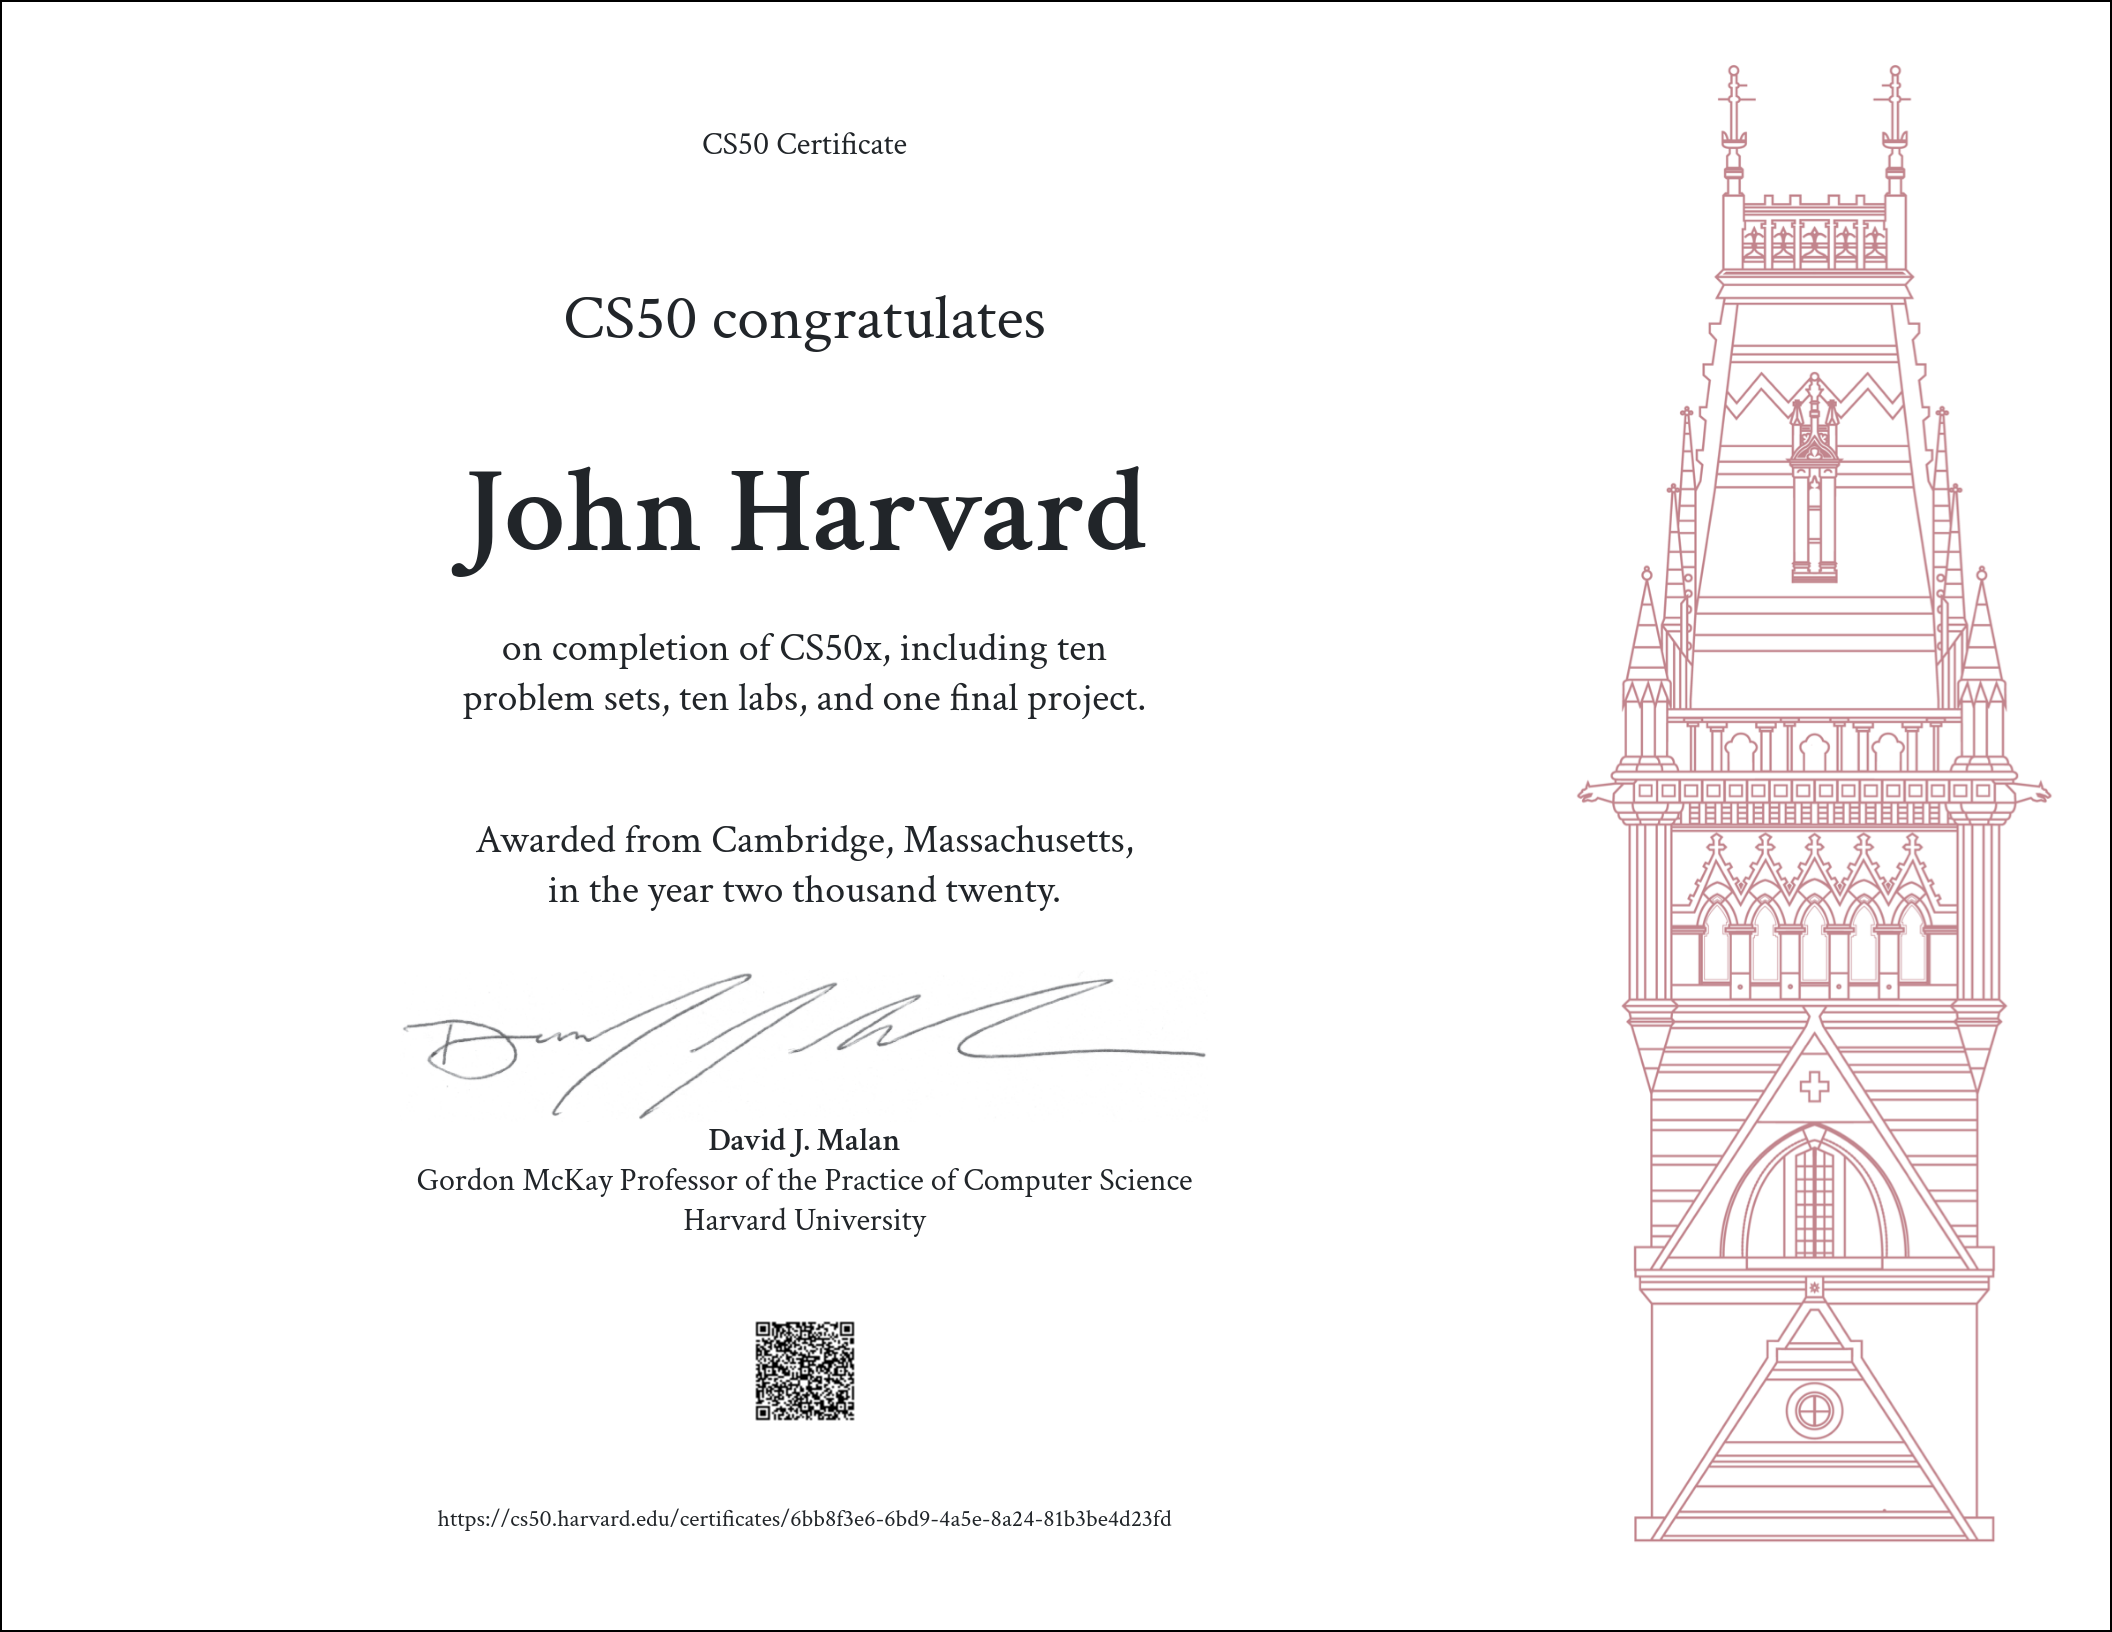 Is Harvard CS50 certificate worth it?